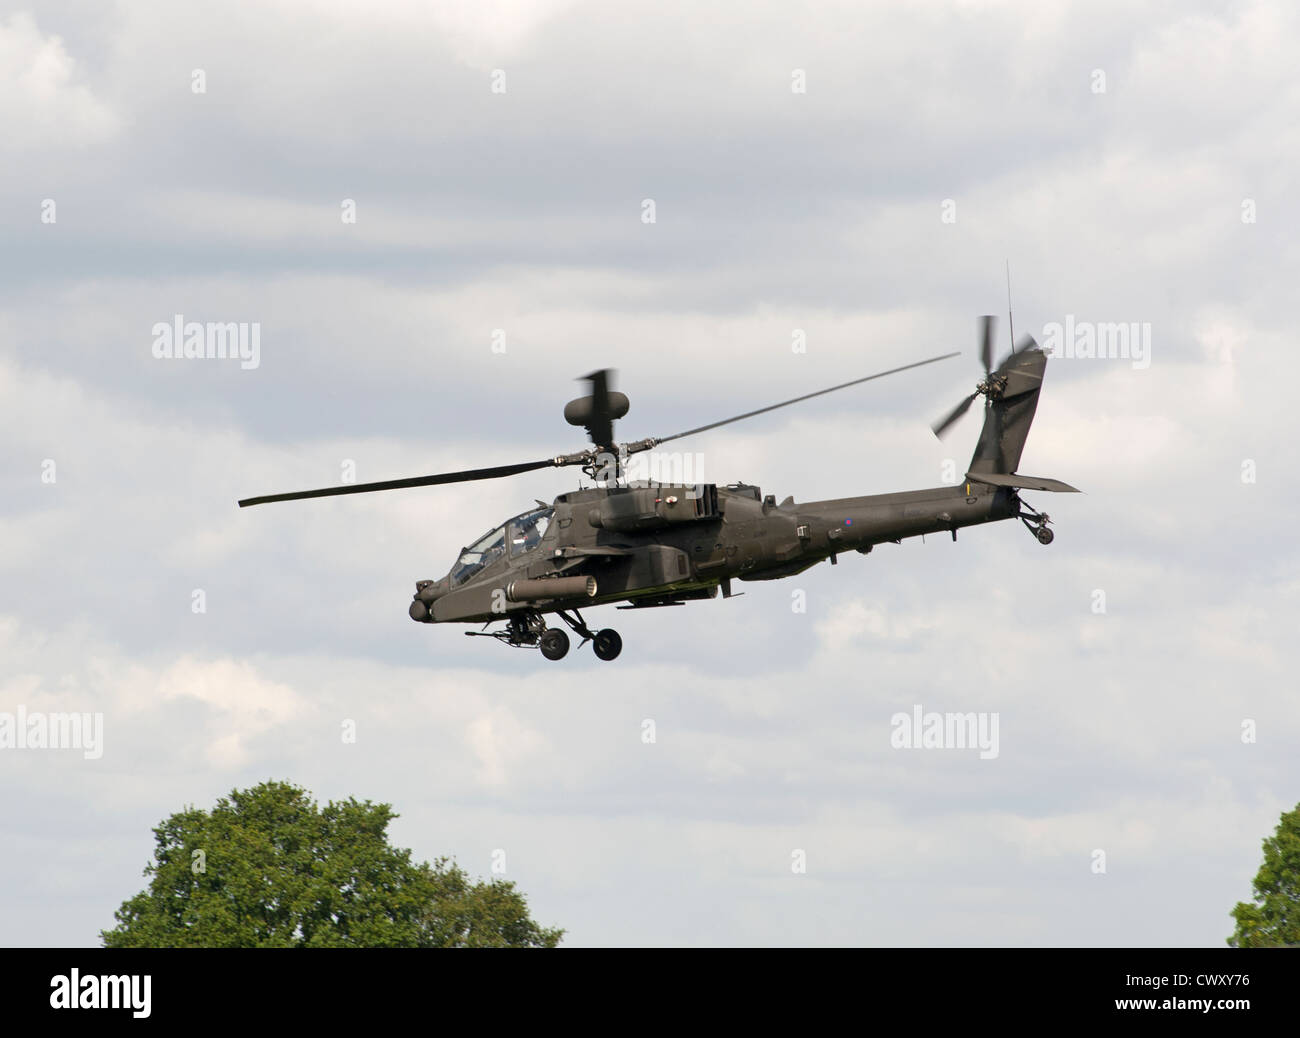 Ejército del Aire militar wah-AH AH-64 Apache helicóptero de ataque de bajo nivel. Ocs 8389 Foto de stock